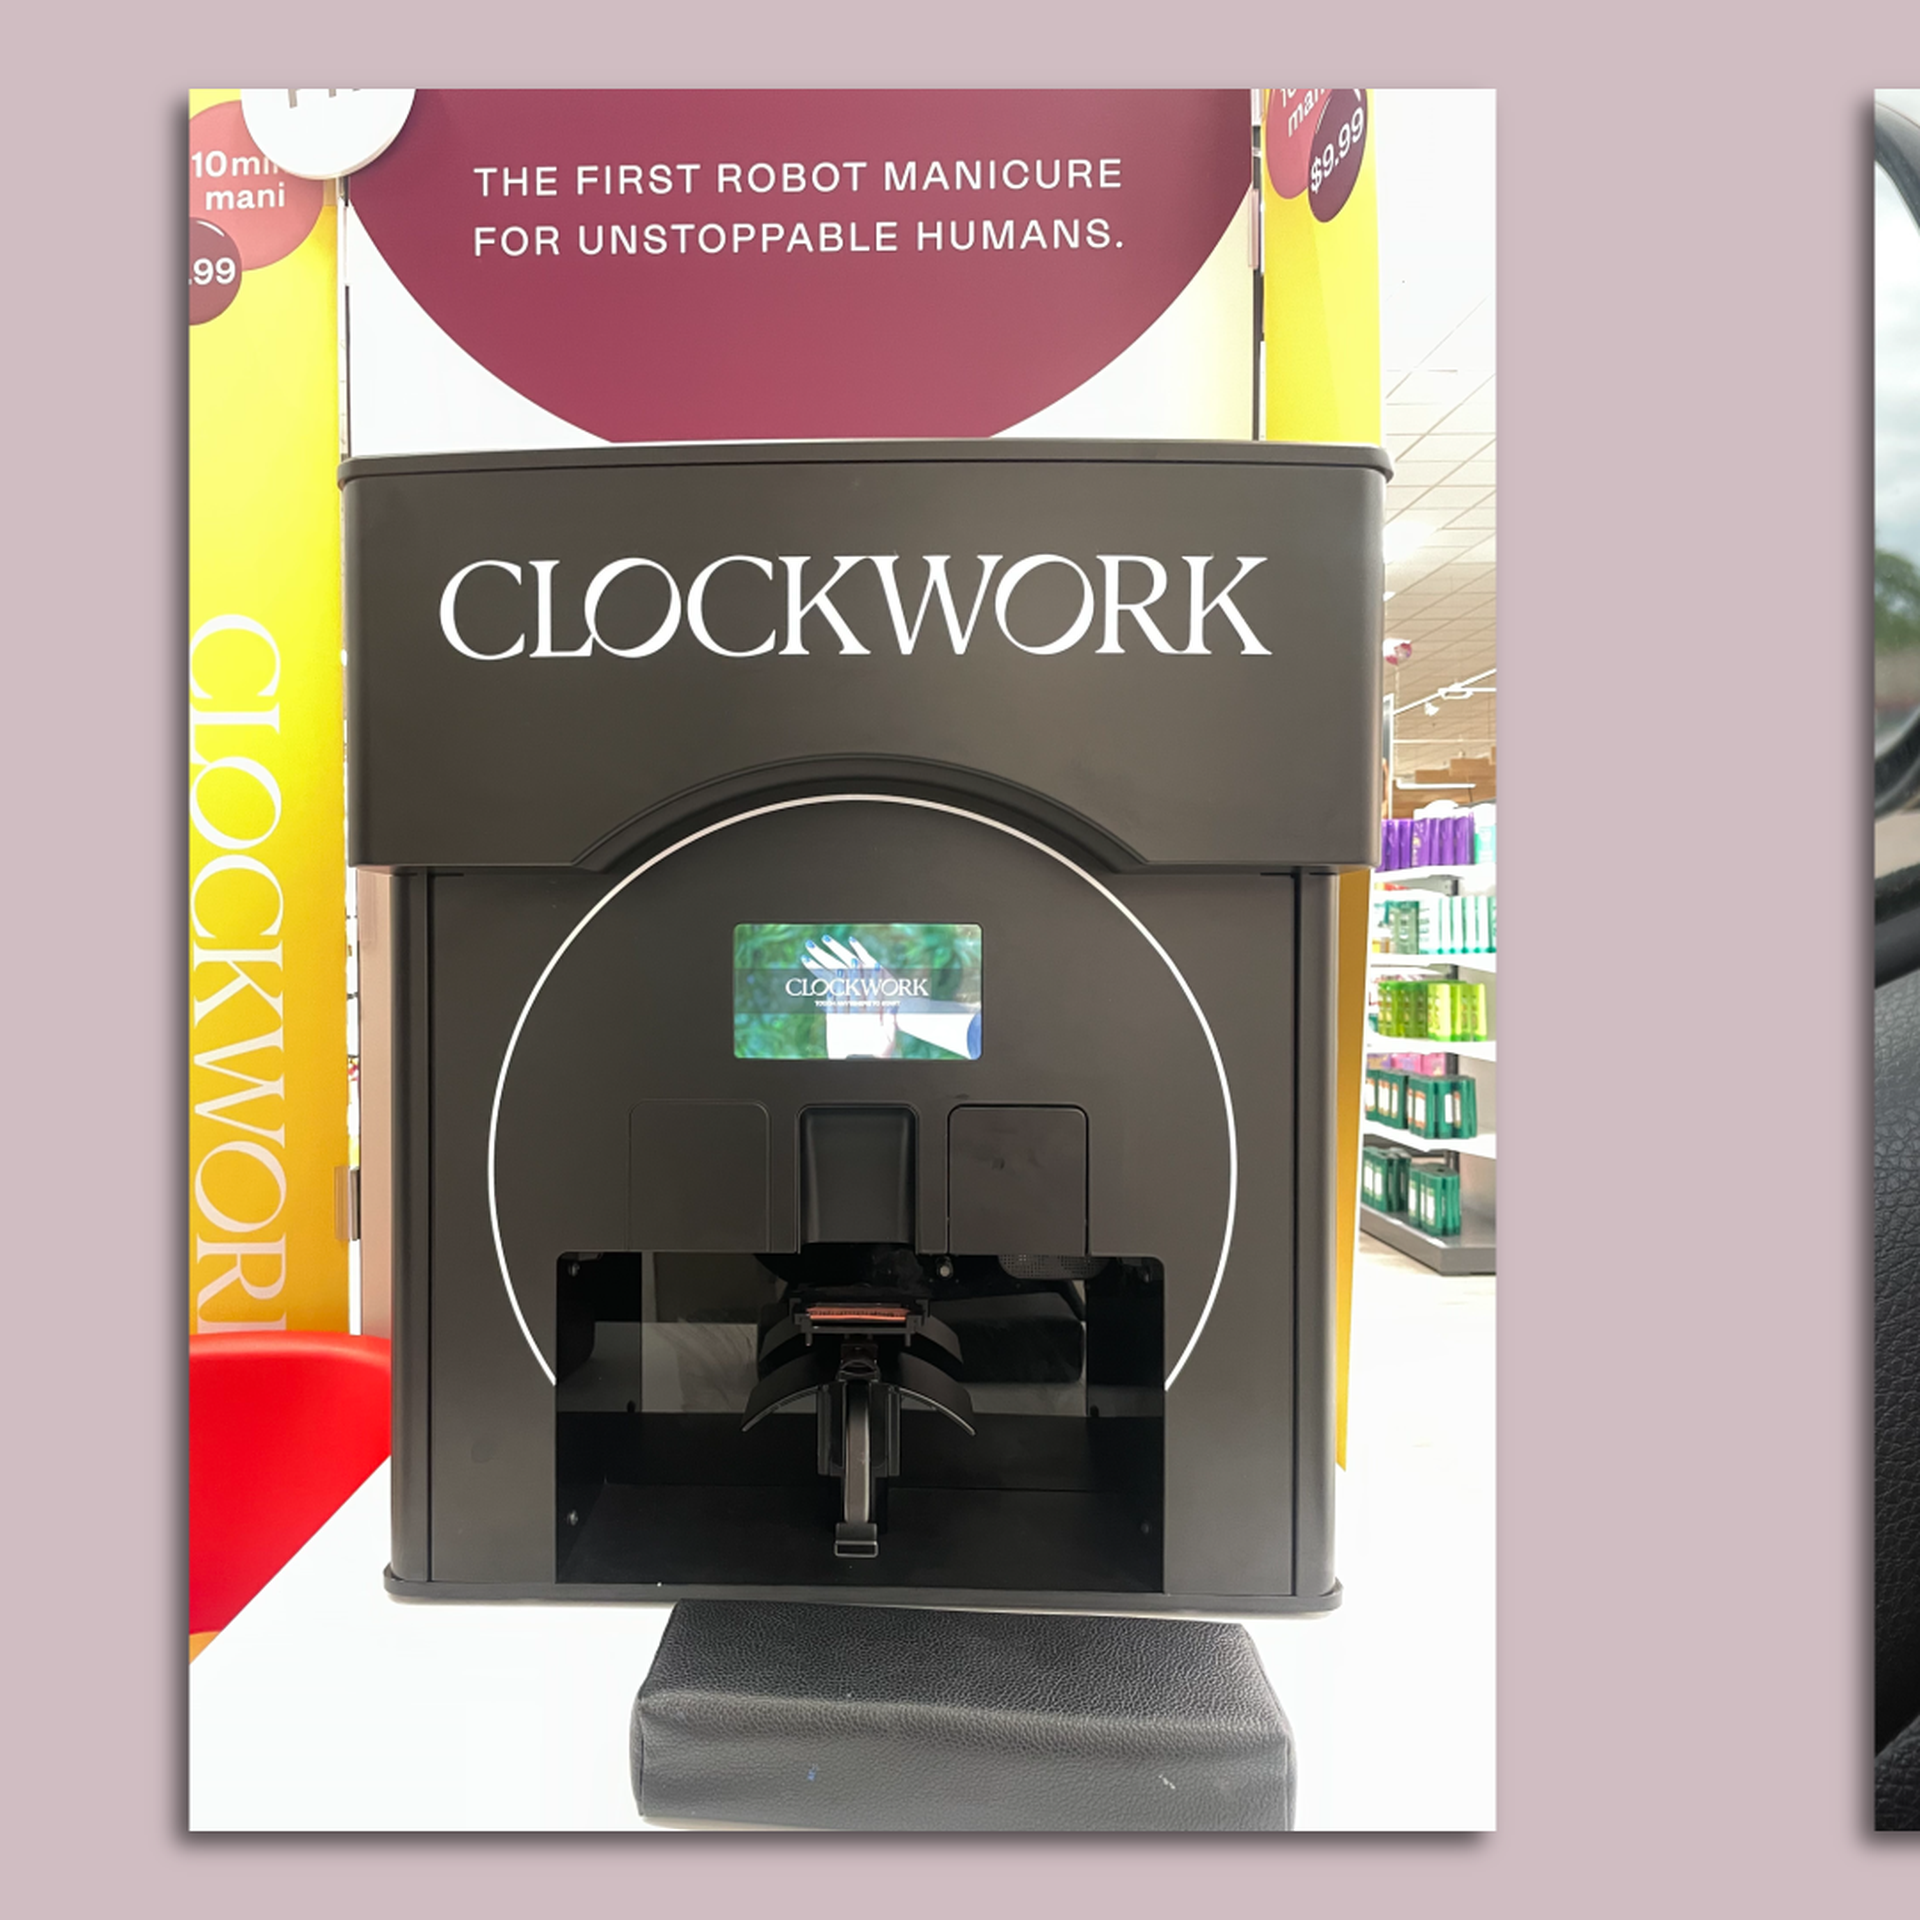 Clockwork: Target's Robot Manicure Machine Honest Review